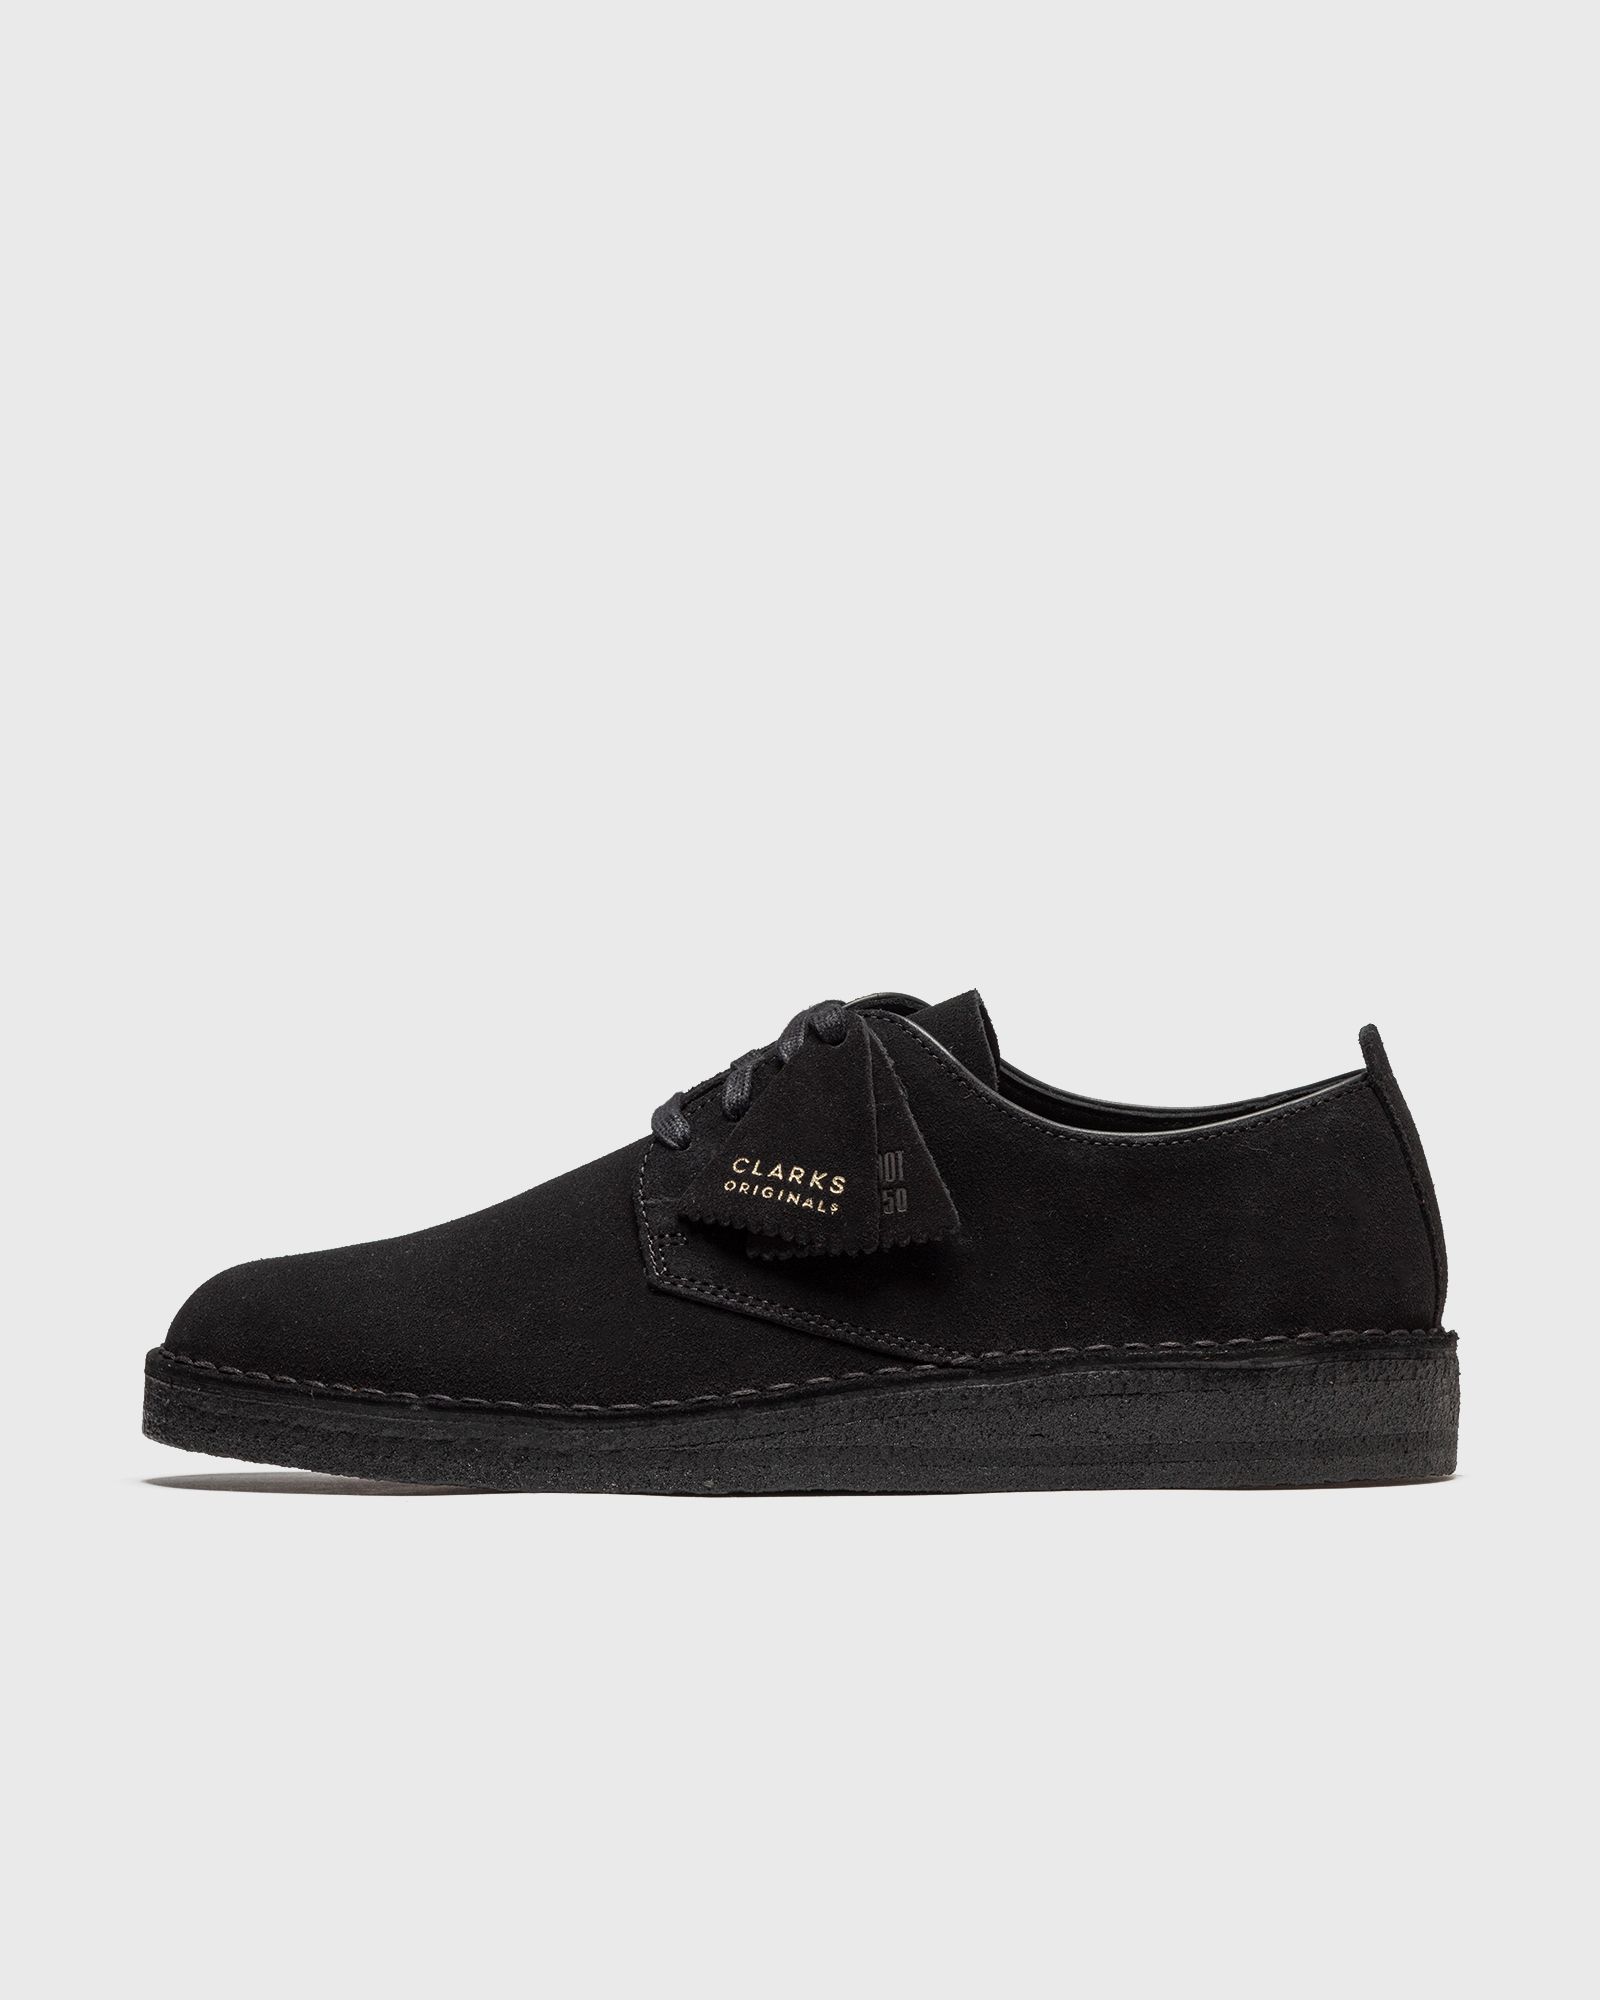 Clarks Originals Coal London men Casual Shoes black in Größe:44 von Clarks Originals